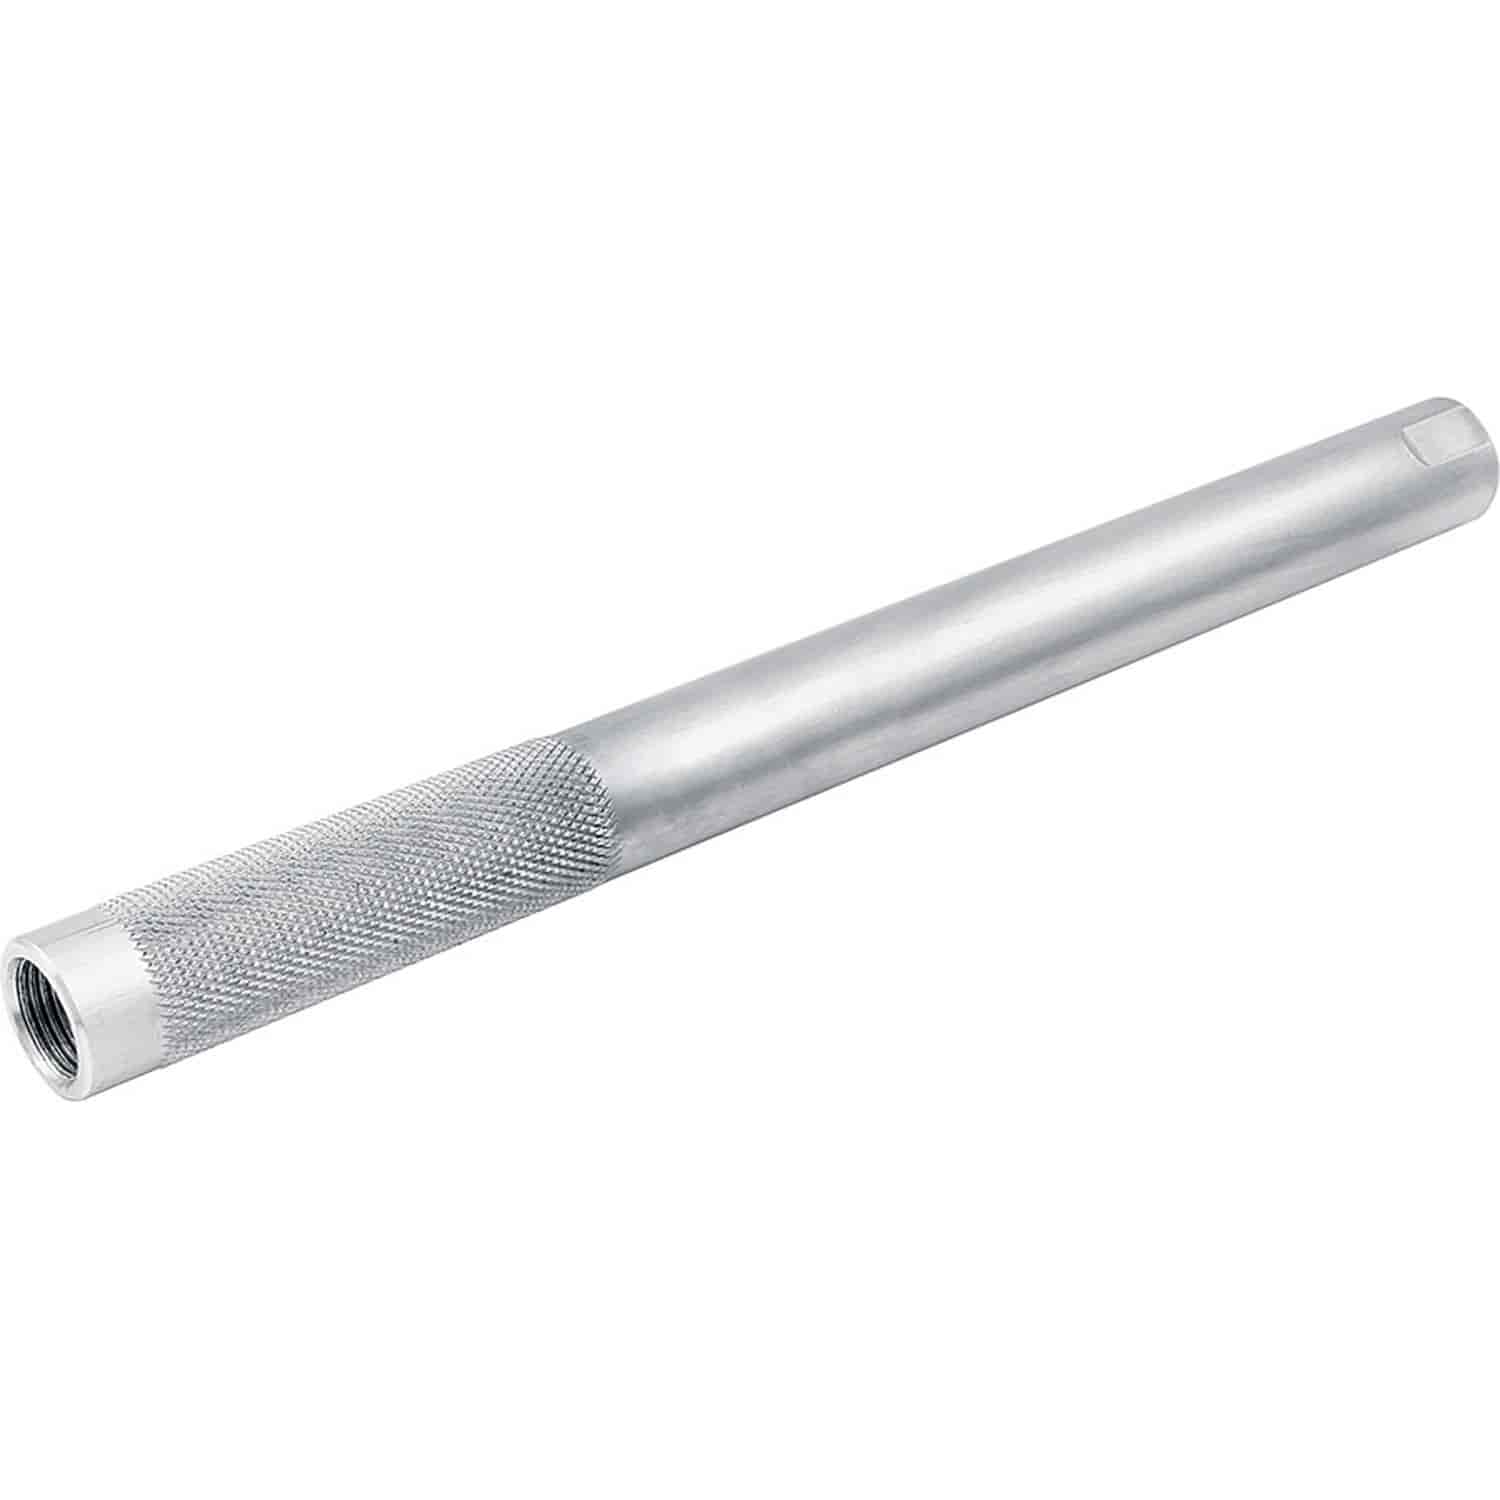 Swedged Aluminum Tie Rod Tube Length: 29